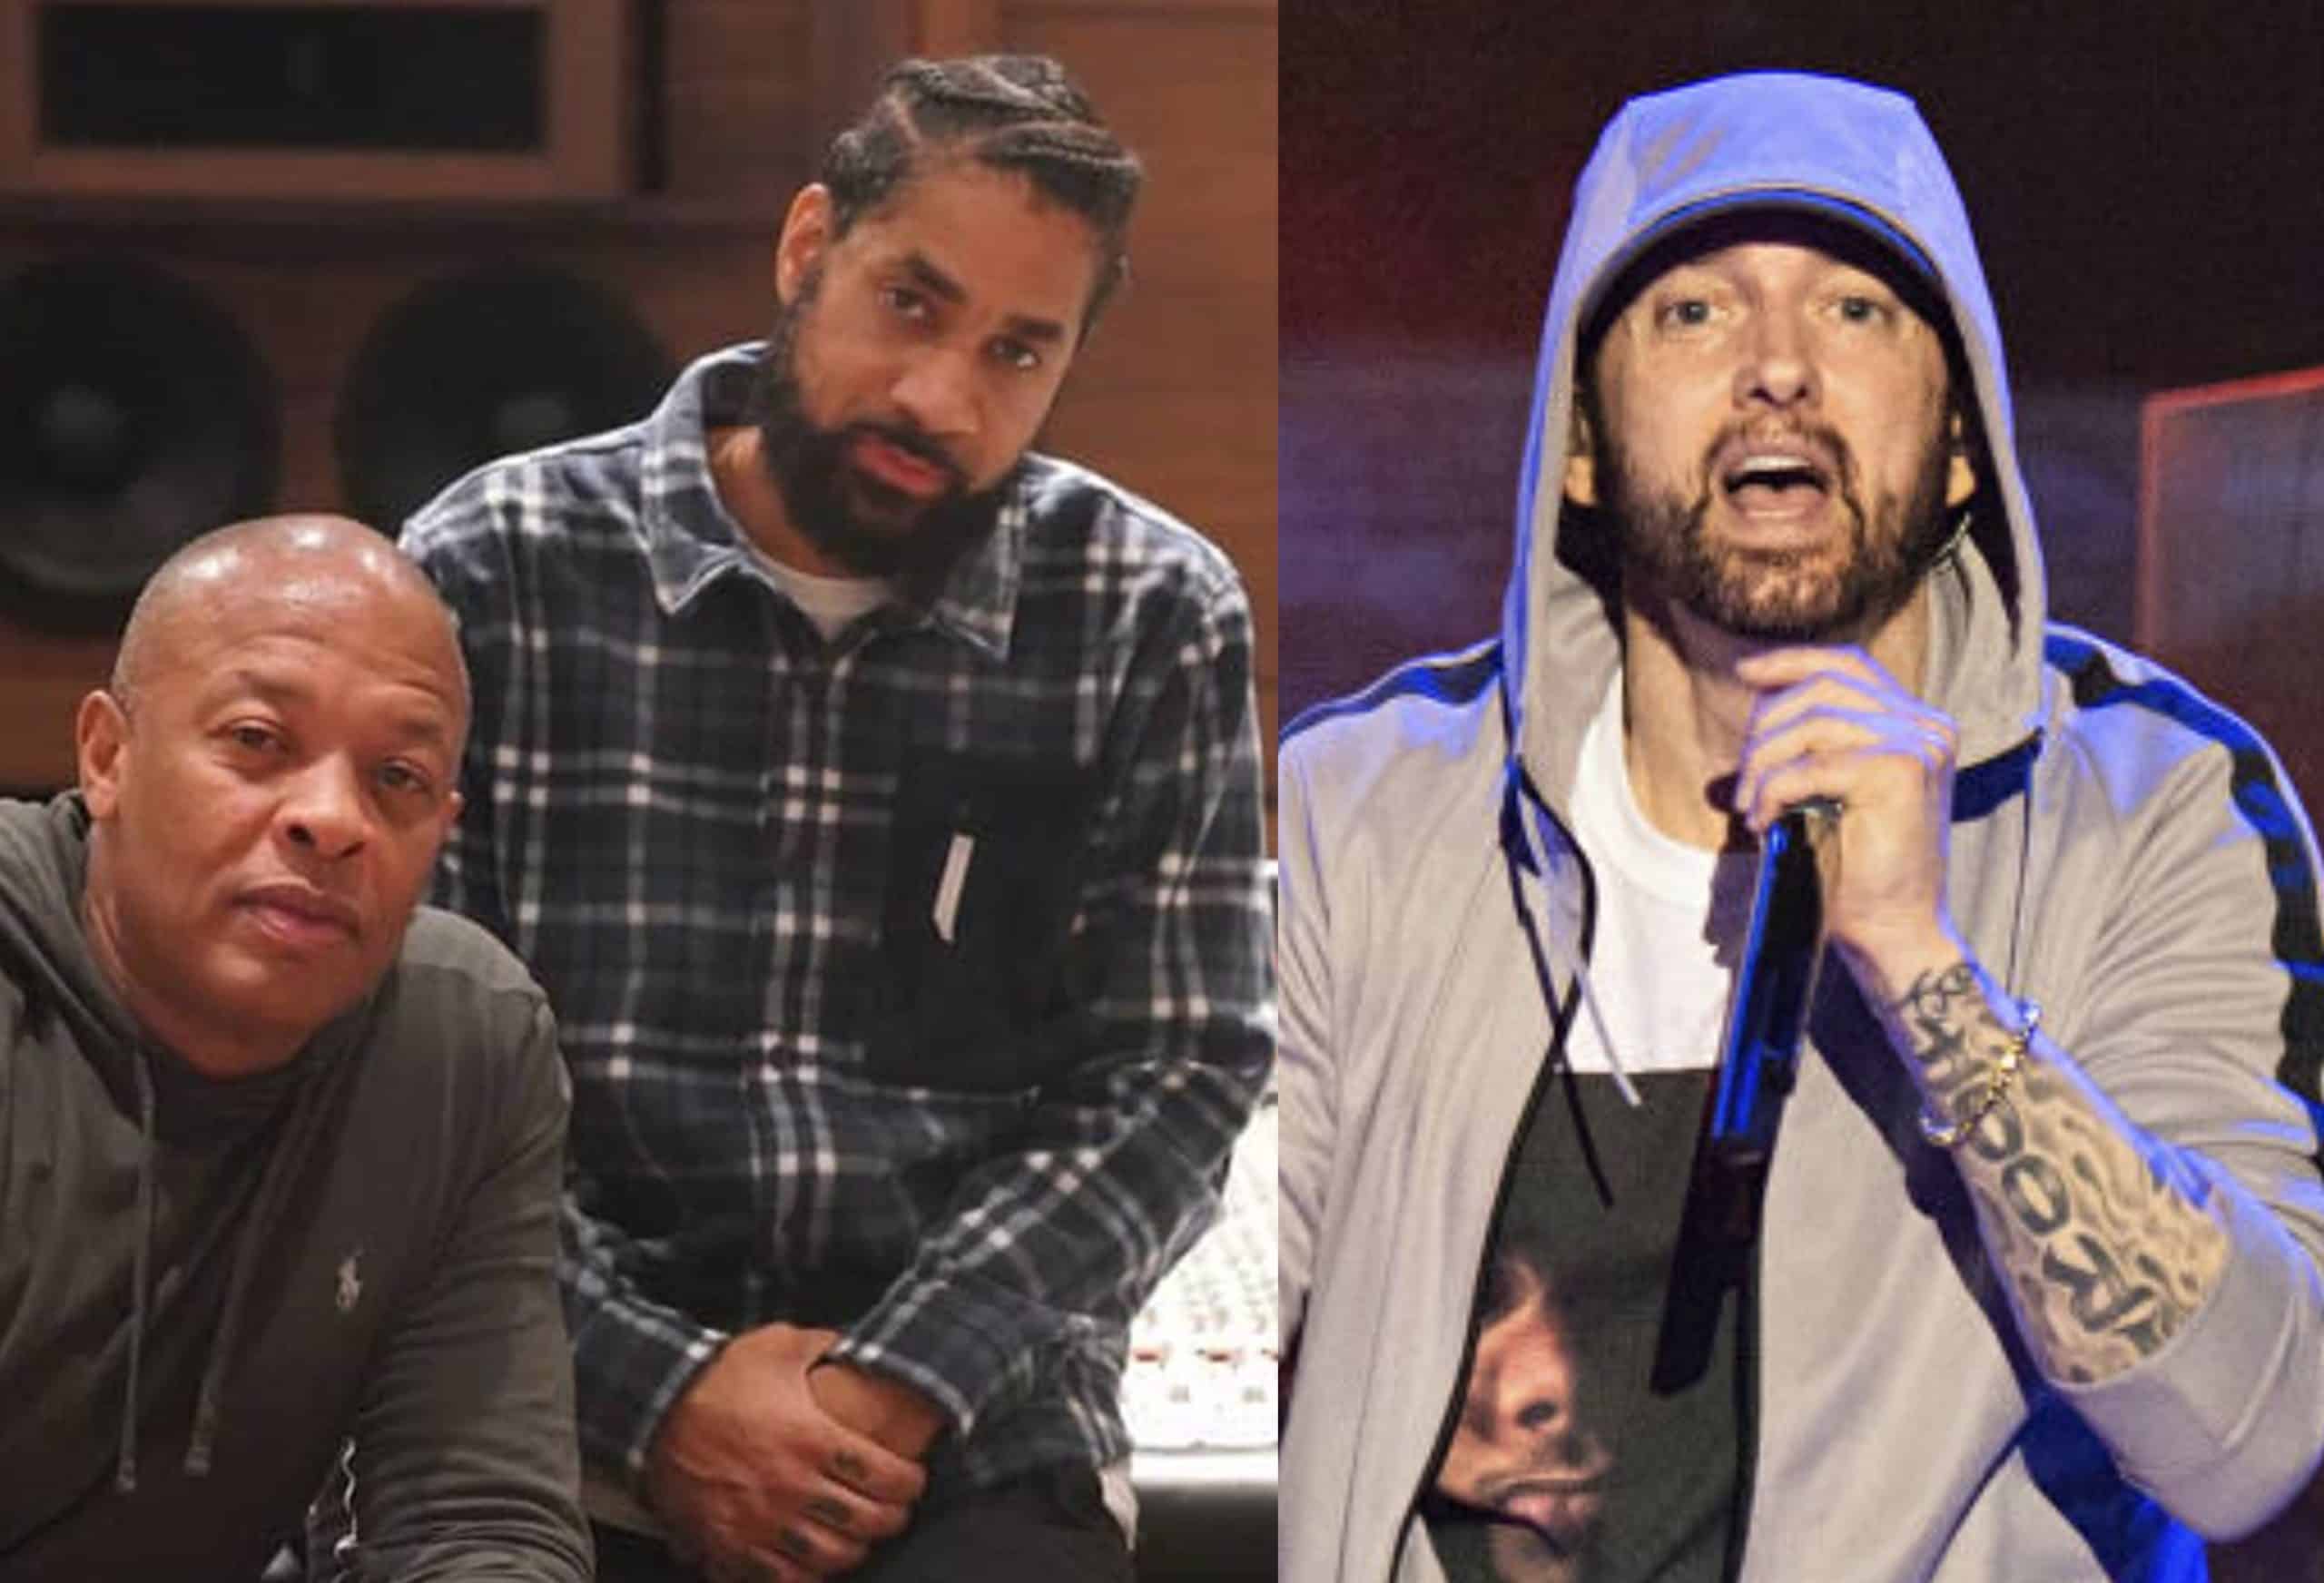 Producer Dem Jointz Speaks on MTBMB Studio Sessions with Eminem